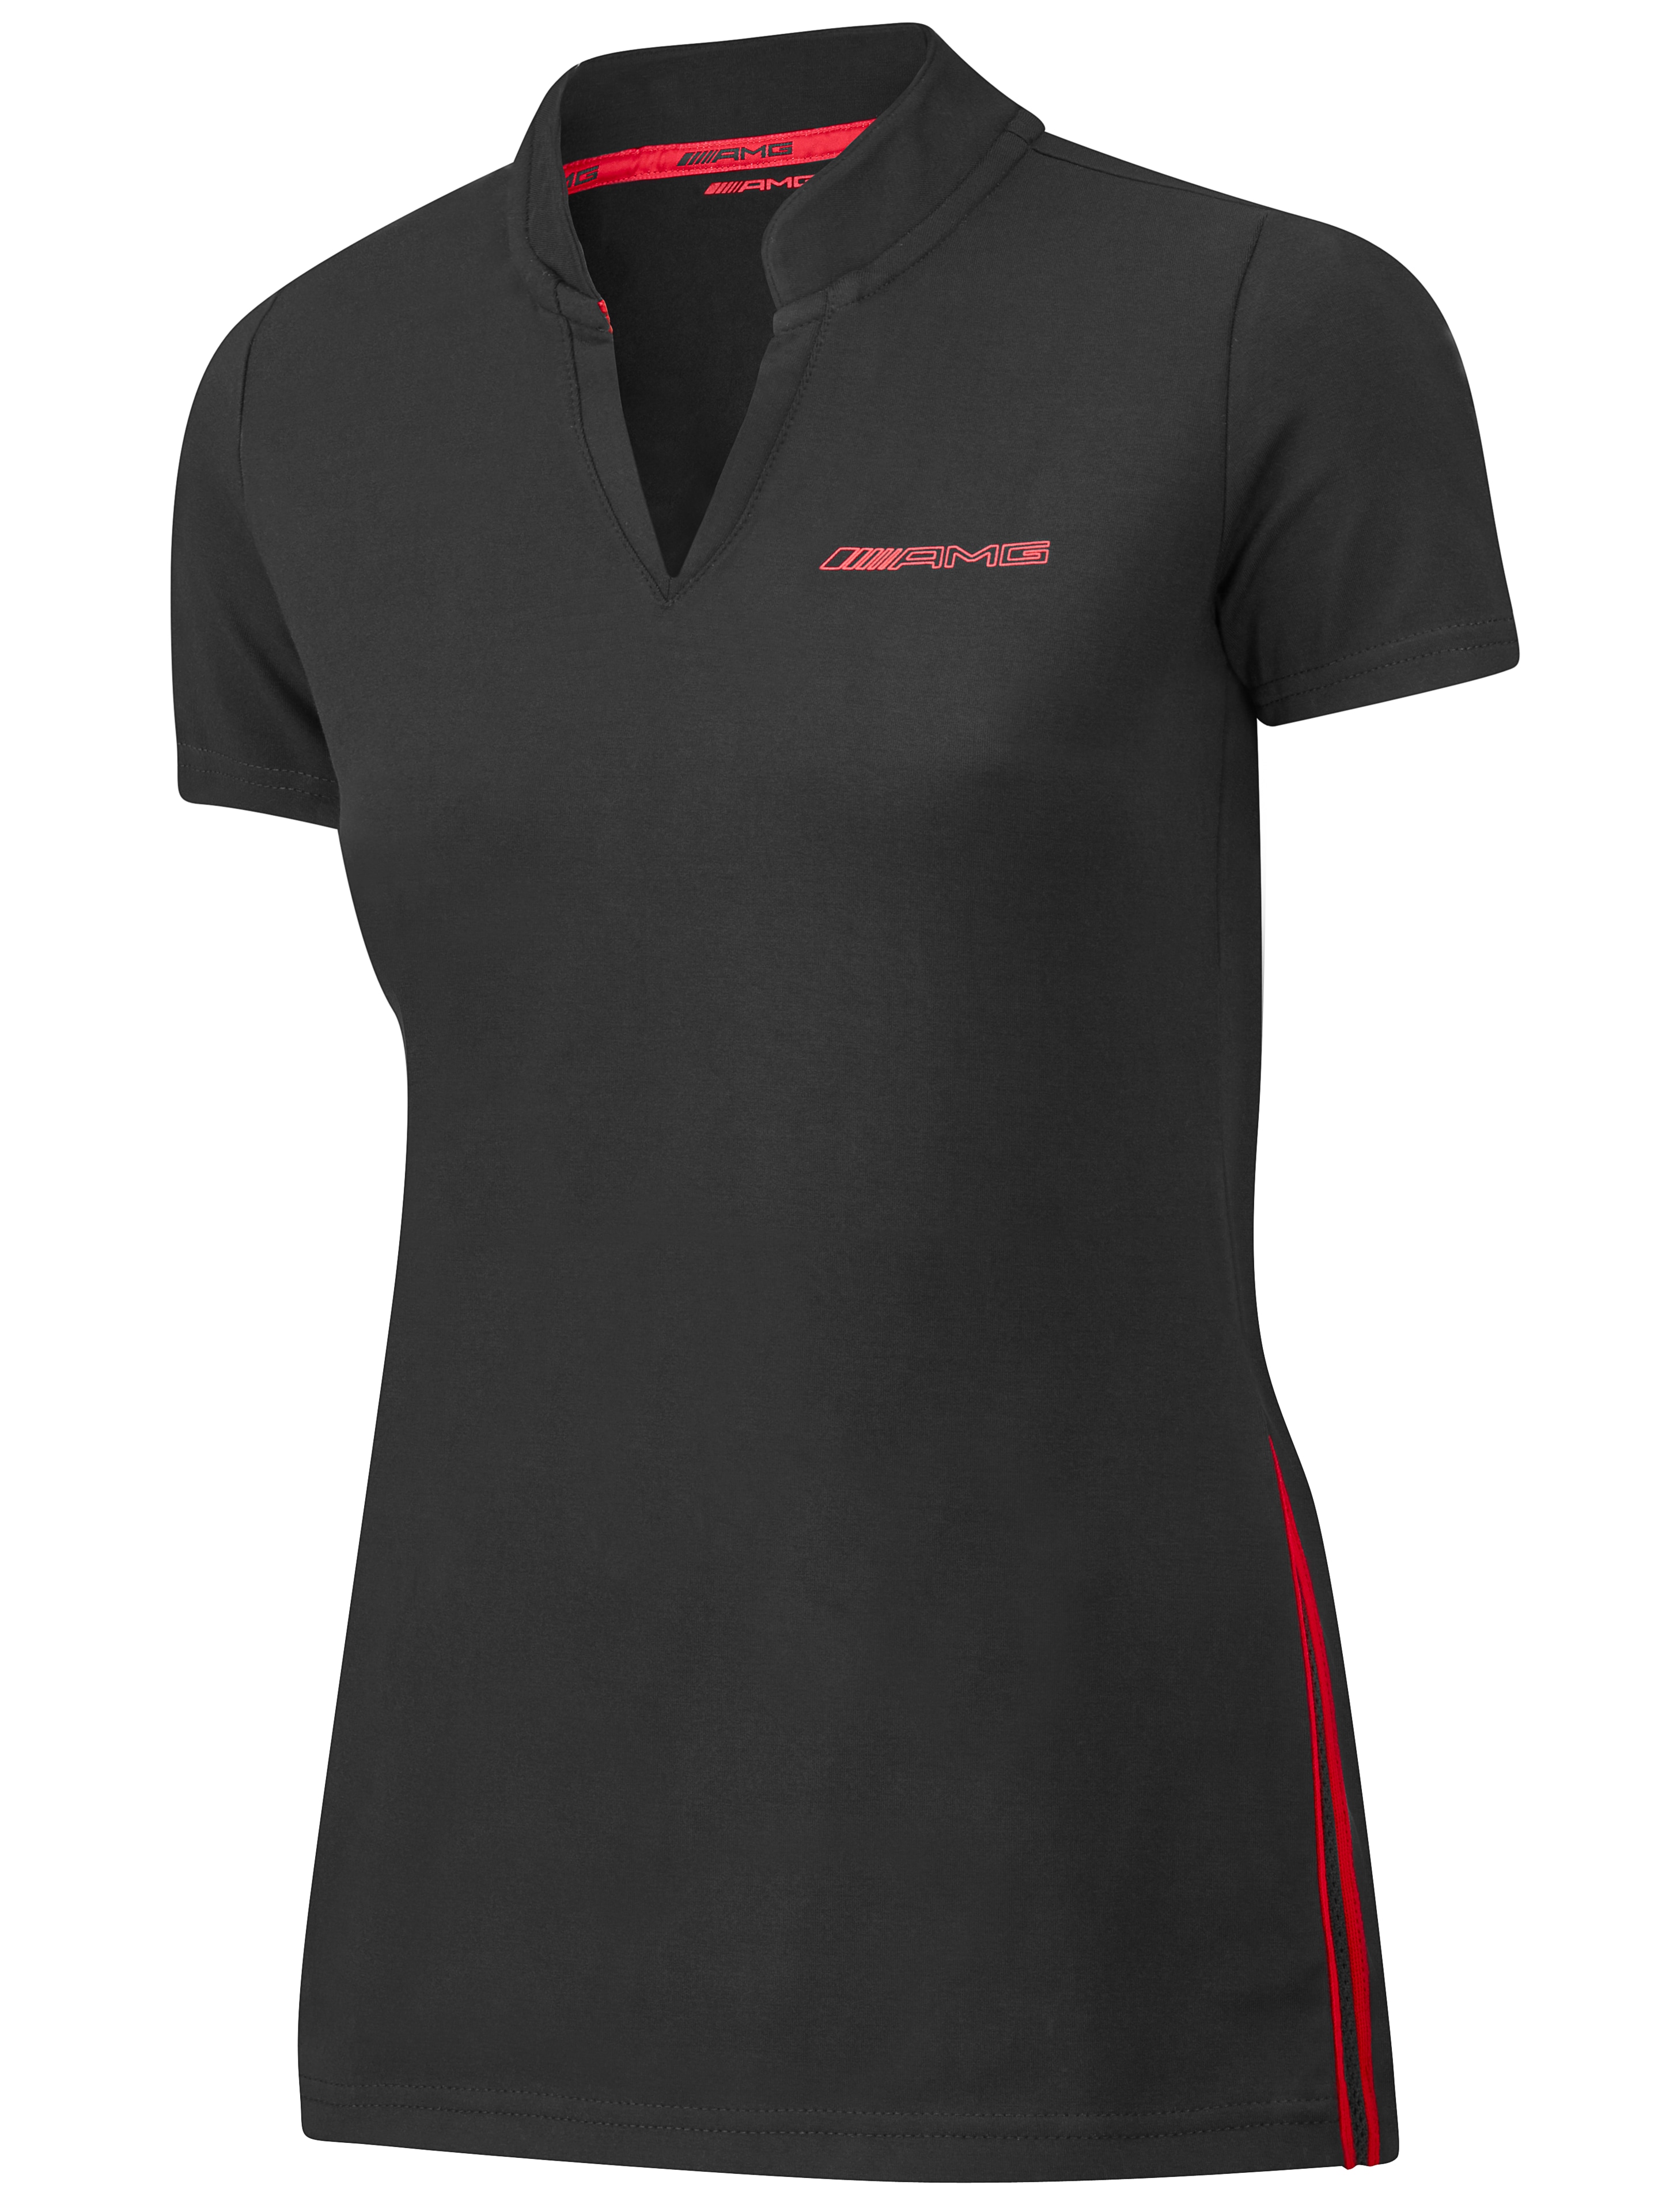 AMG Poloshirt Damen - schwarz / rot, M